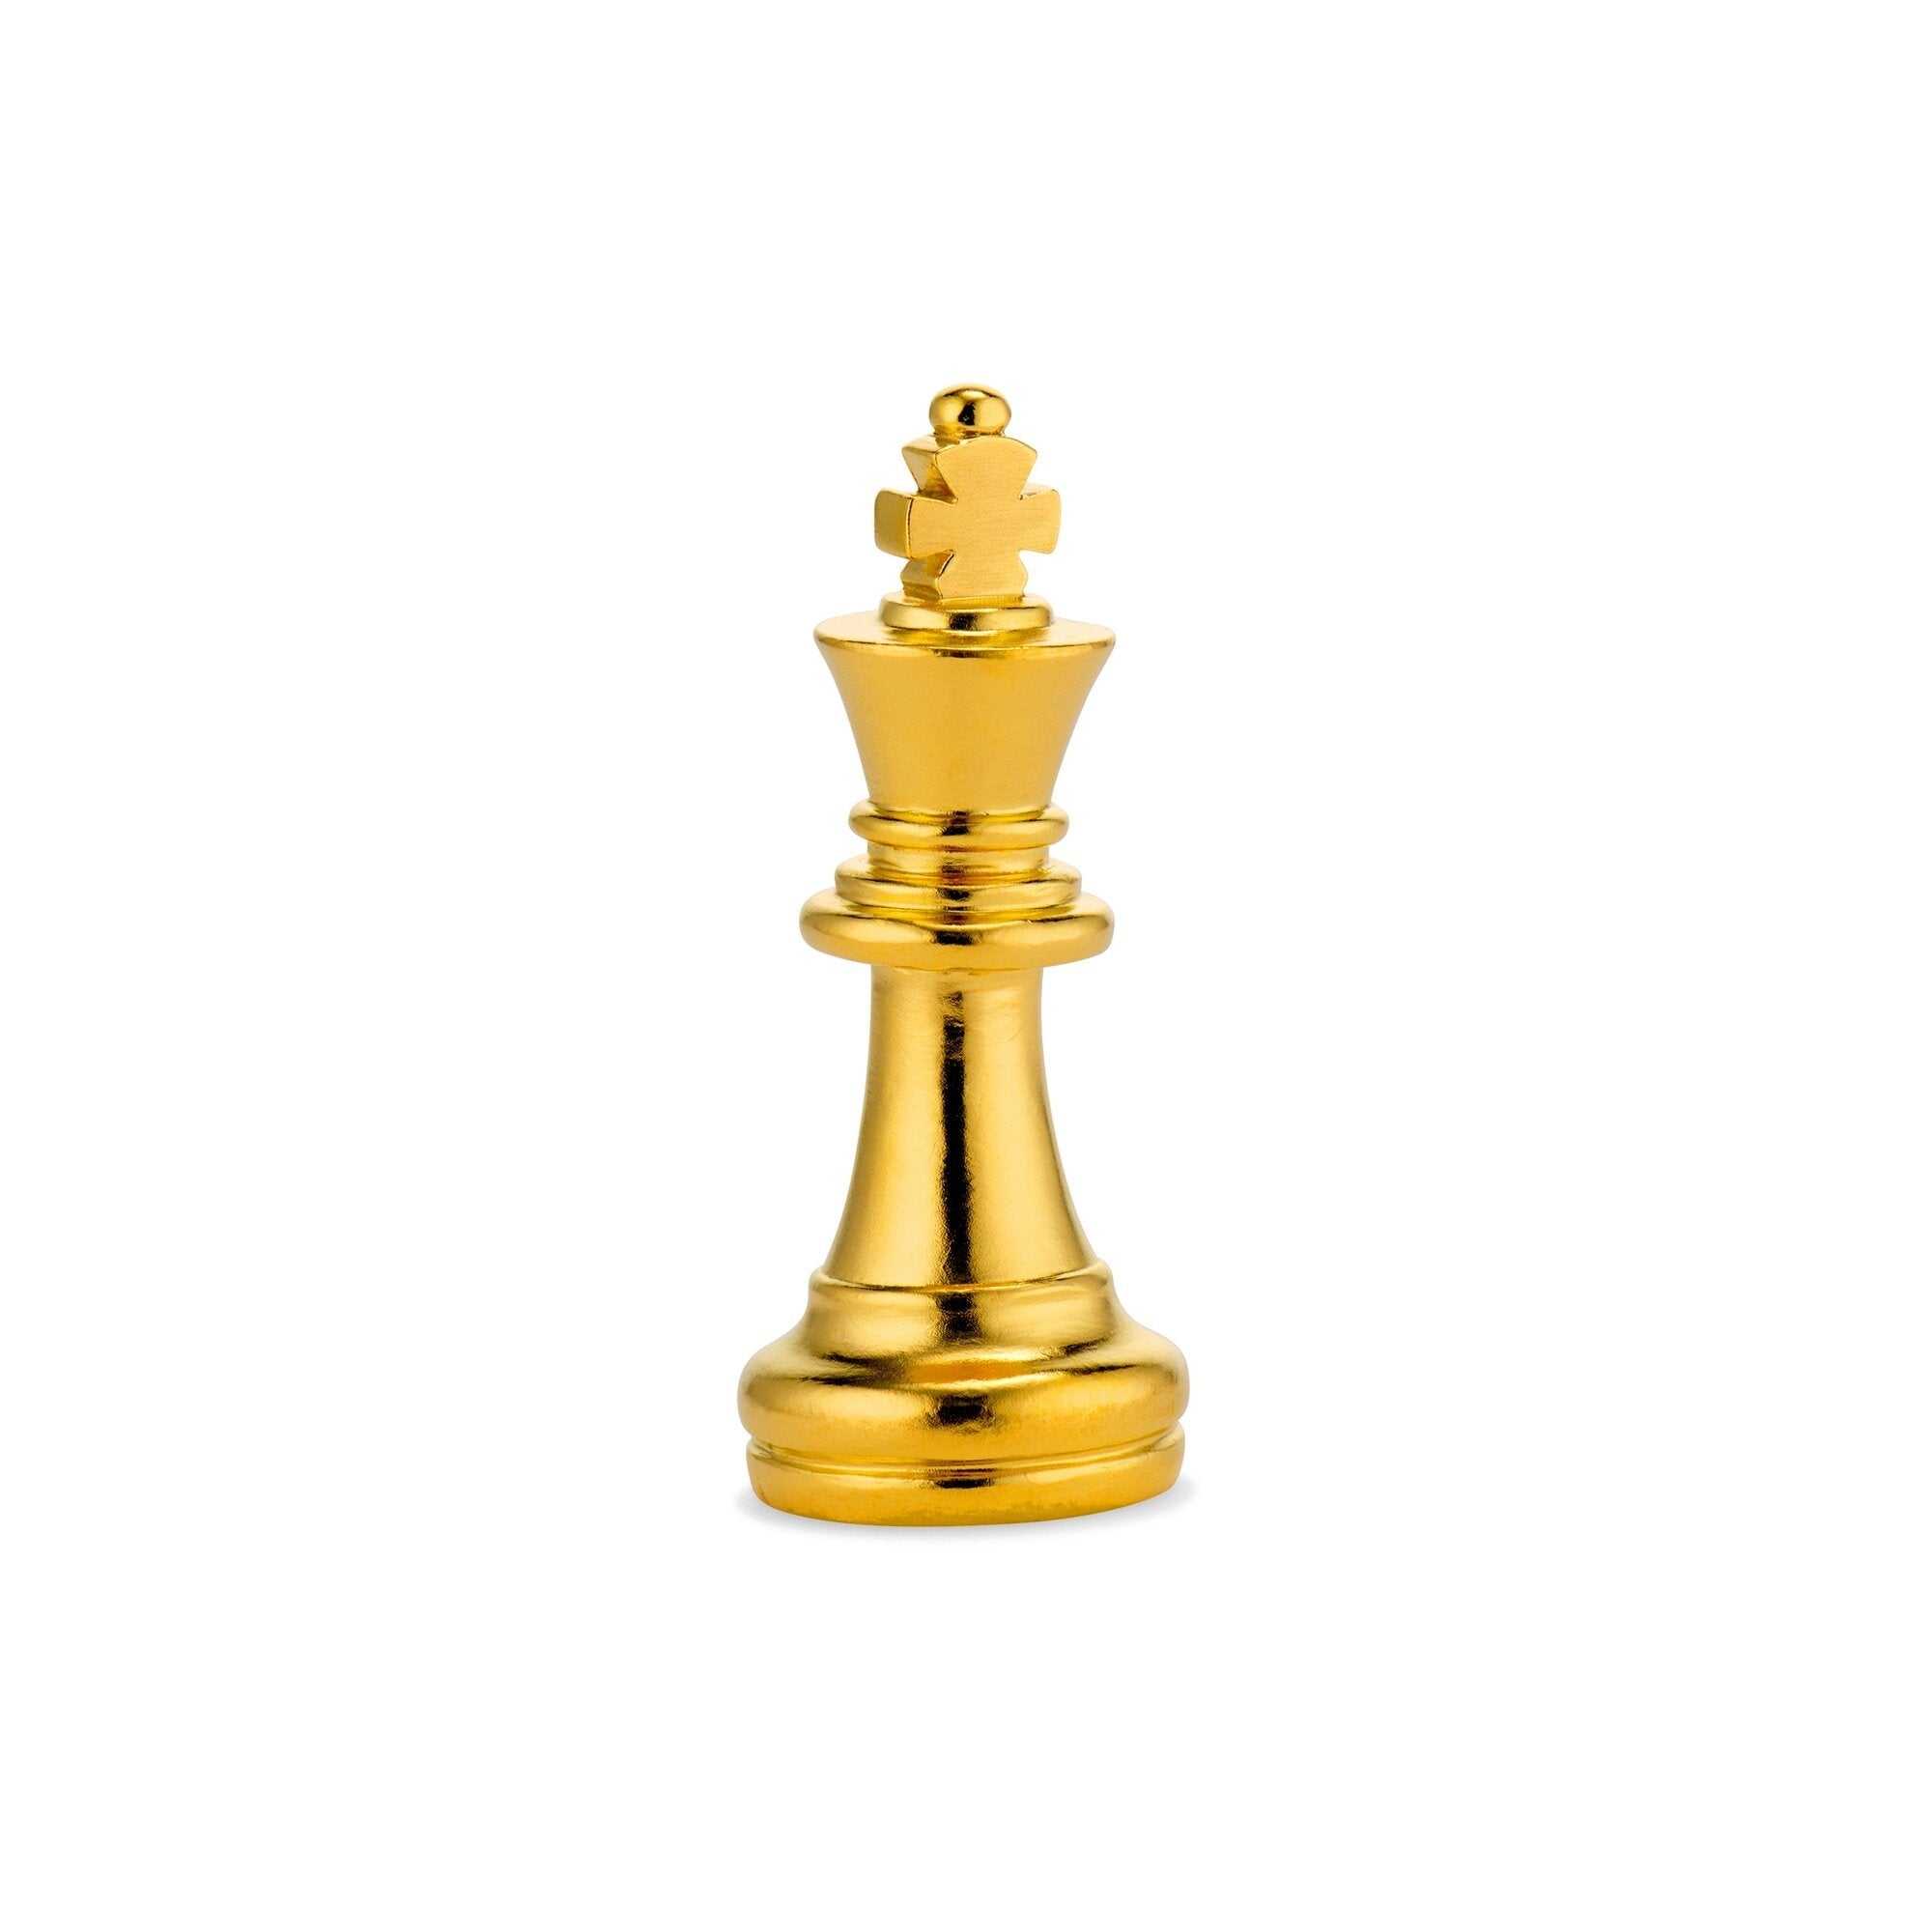 King Chess